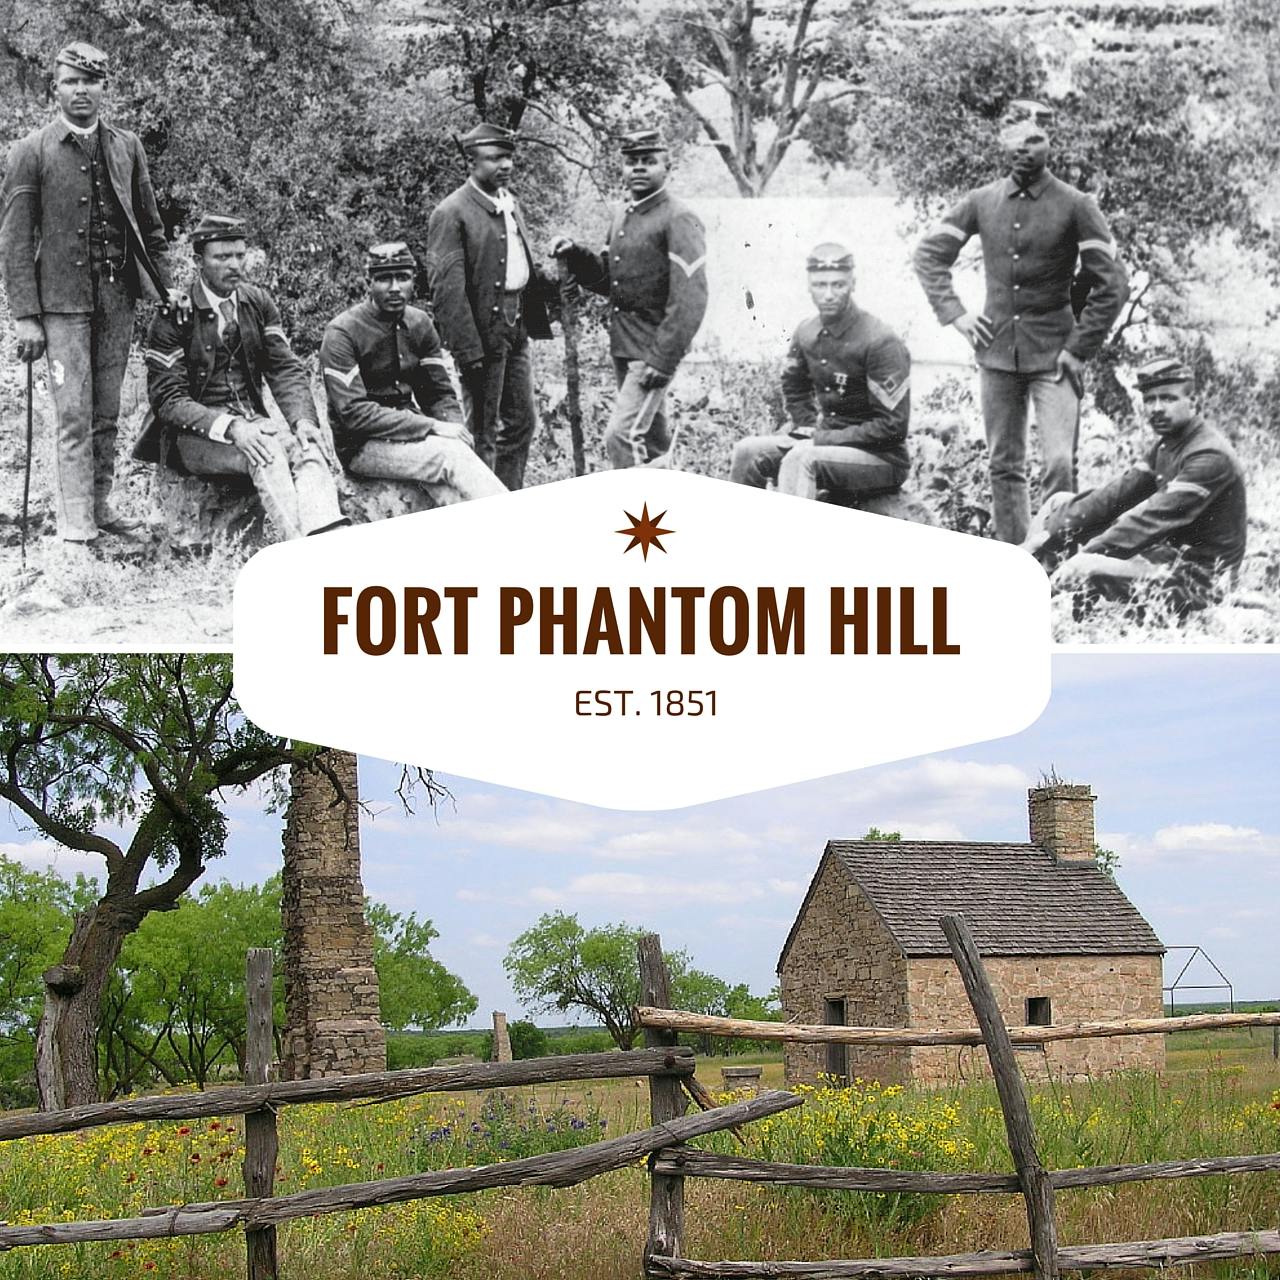 Fort Phantom Hill Day Trip